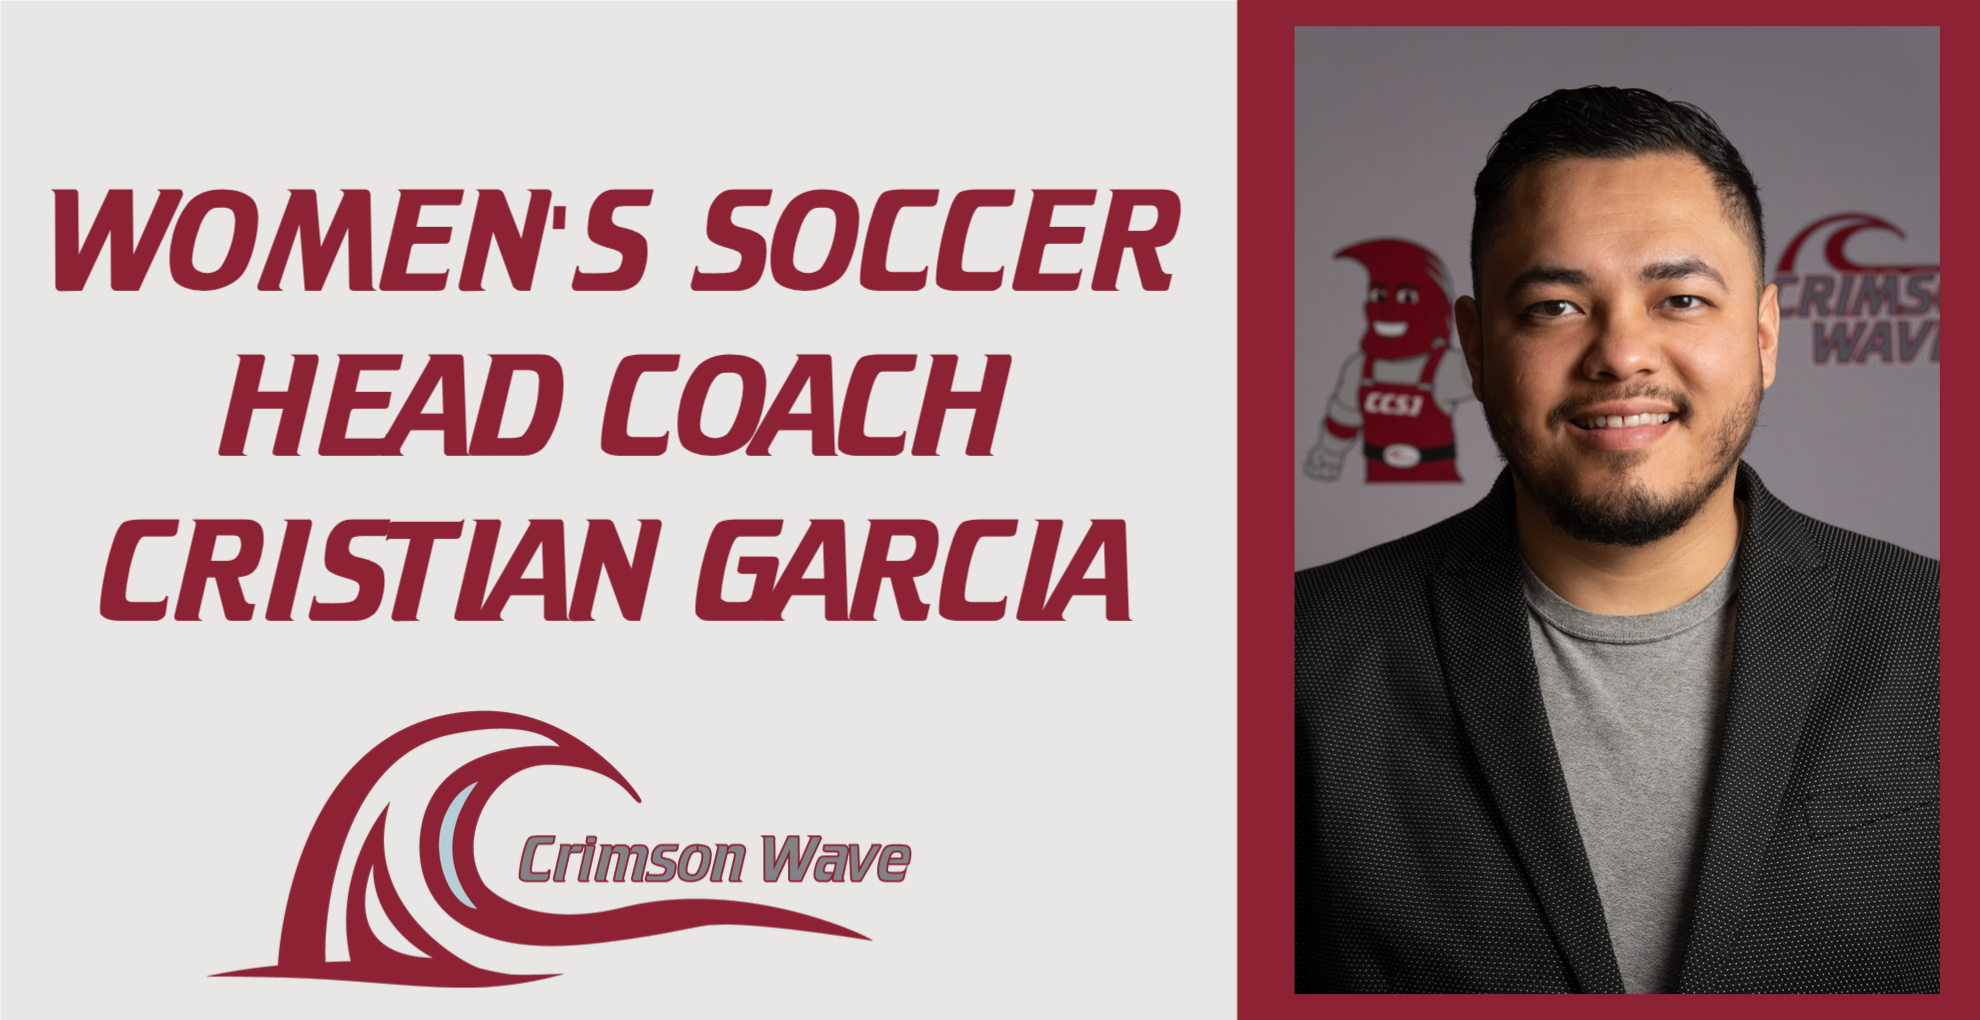 Garcia named CCSJ Women’s Soccer Head Coach